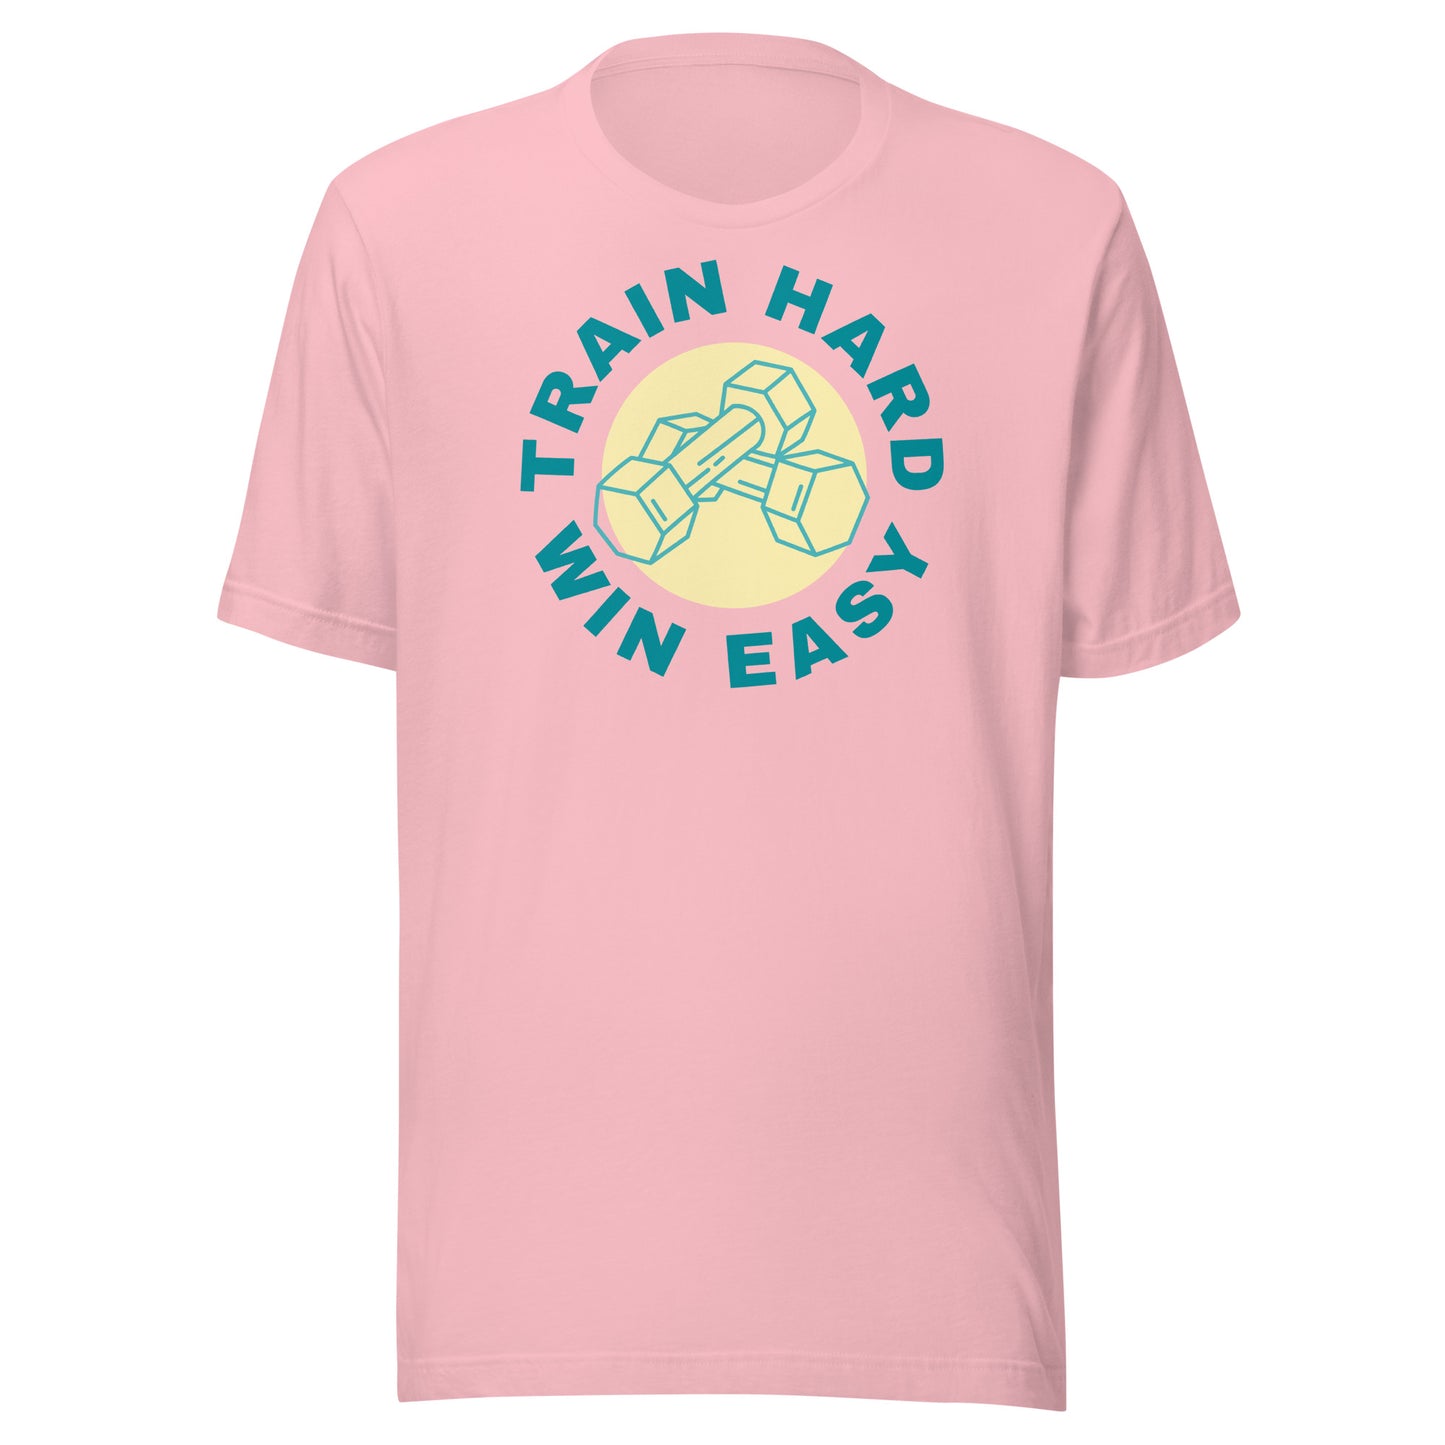 Train Hard, Win Easy - Premium Workout T-Shirts